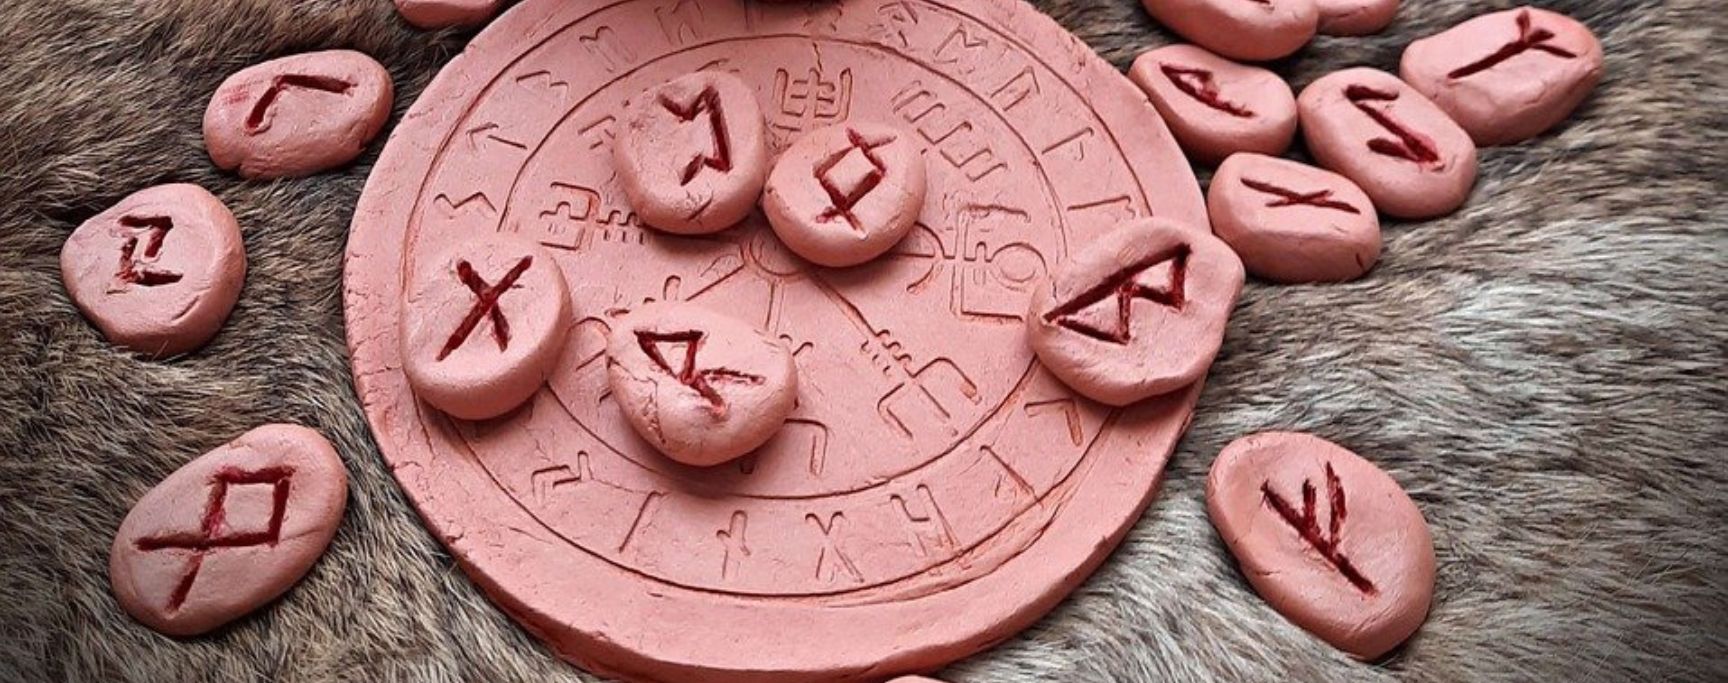 symbole viking rune